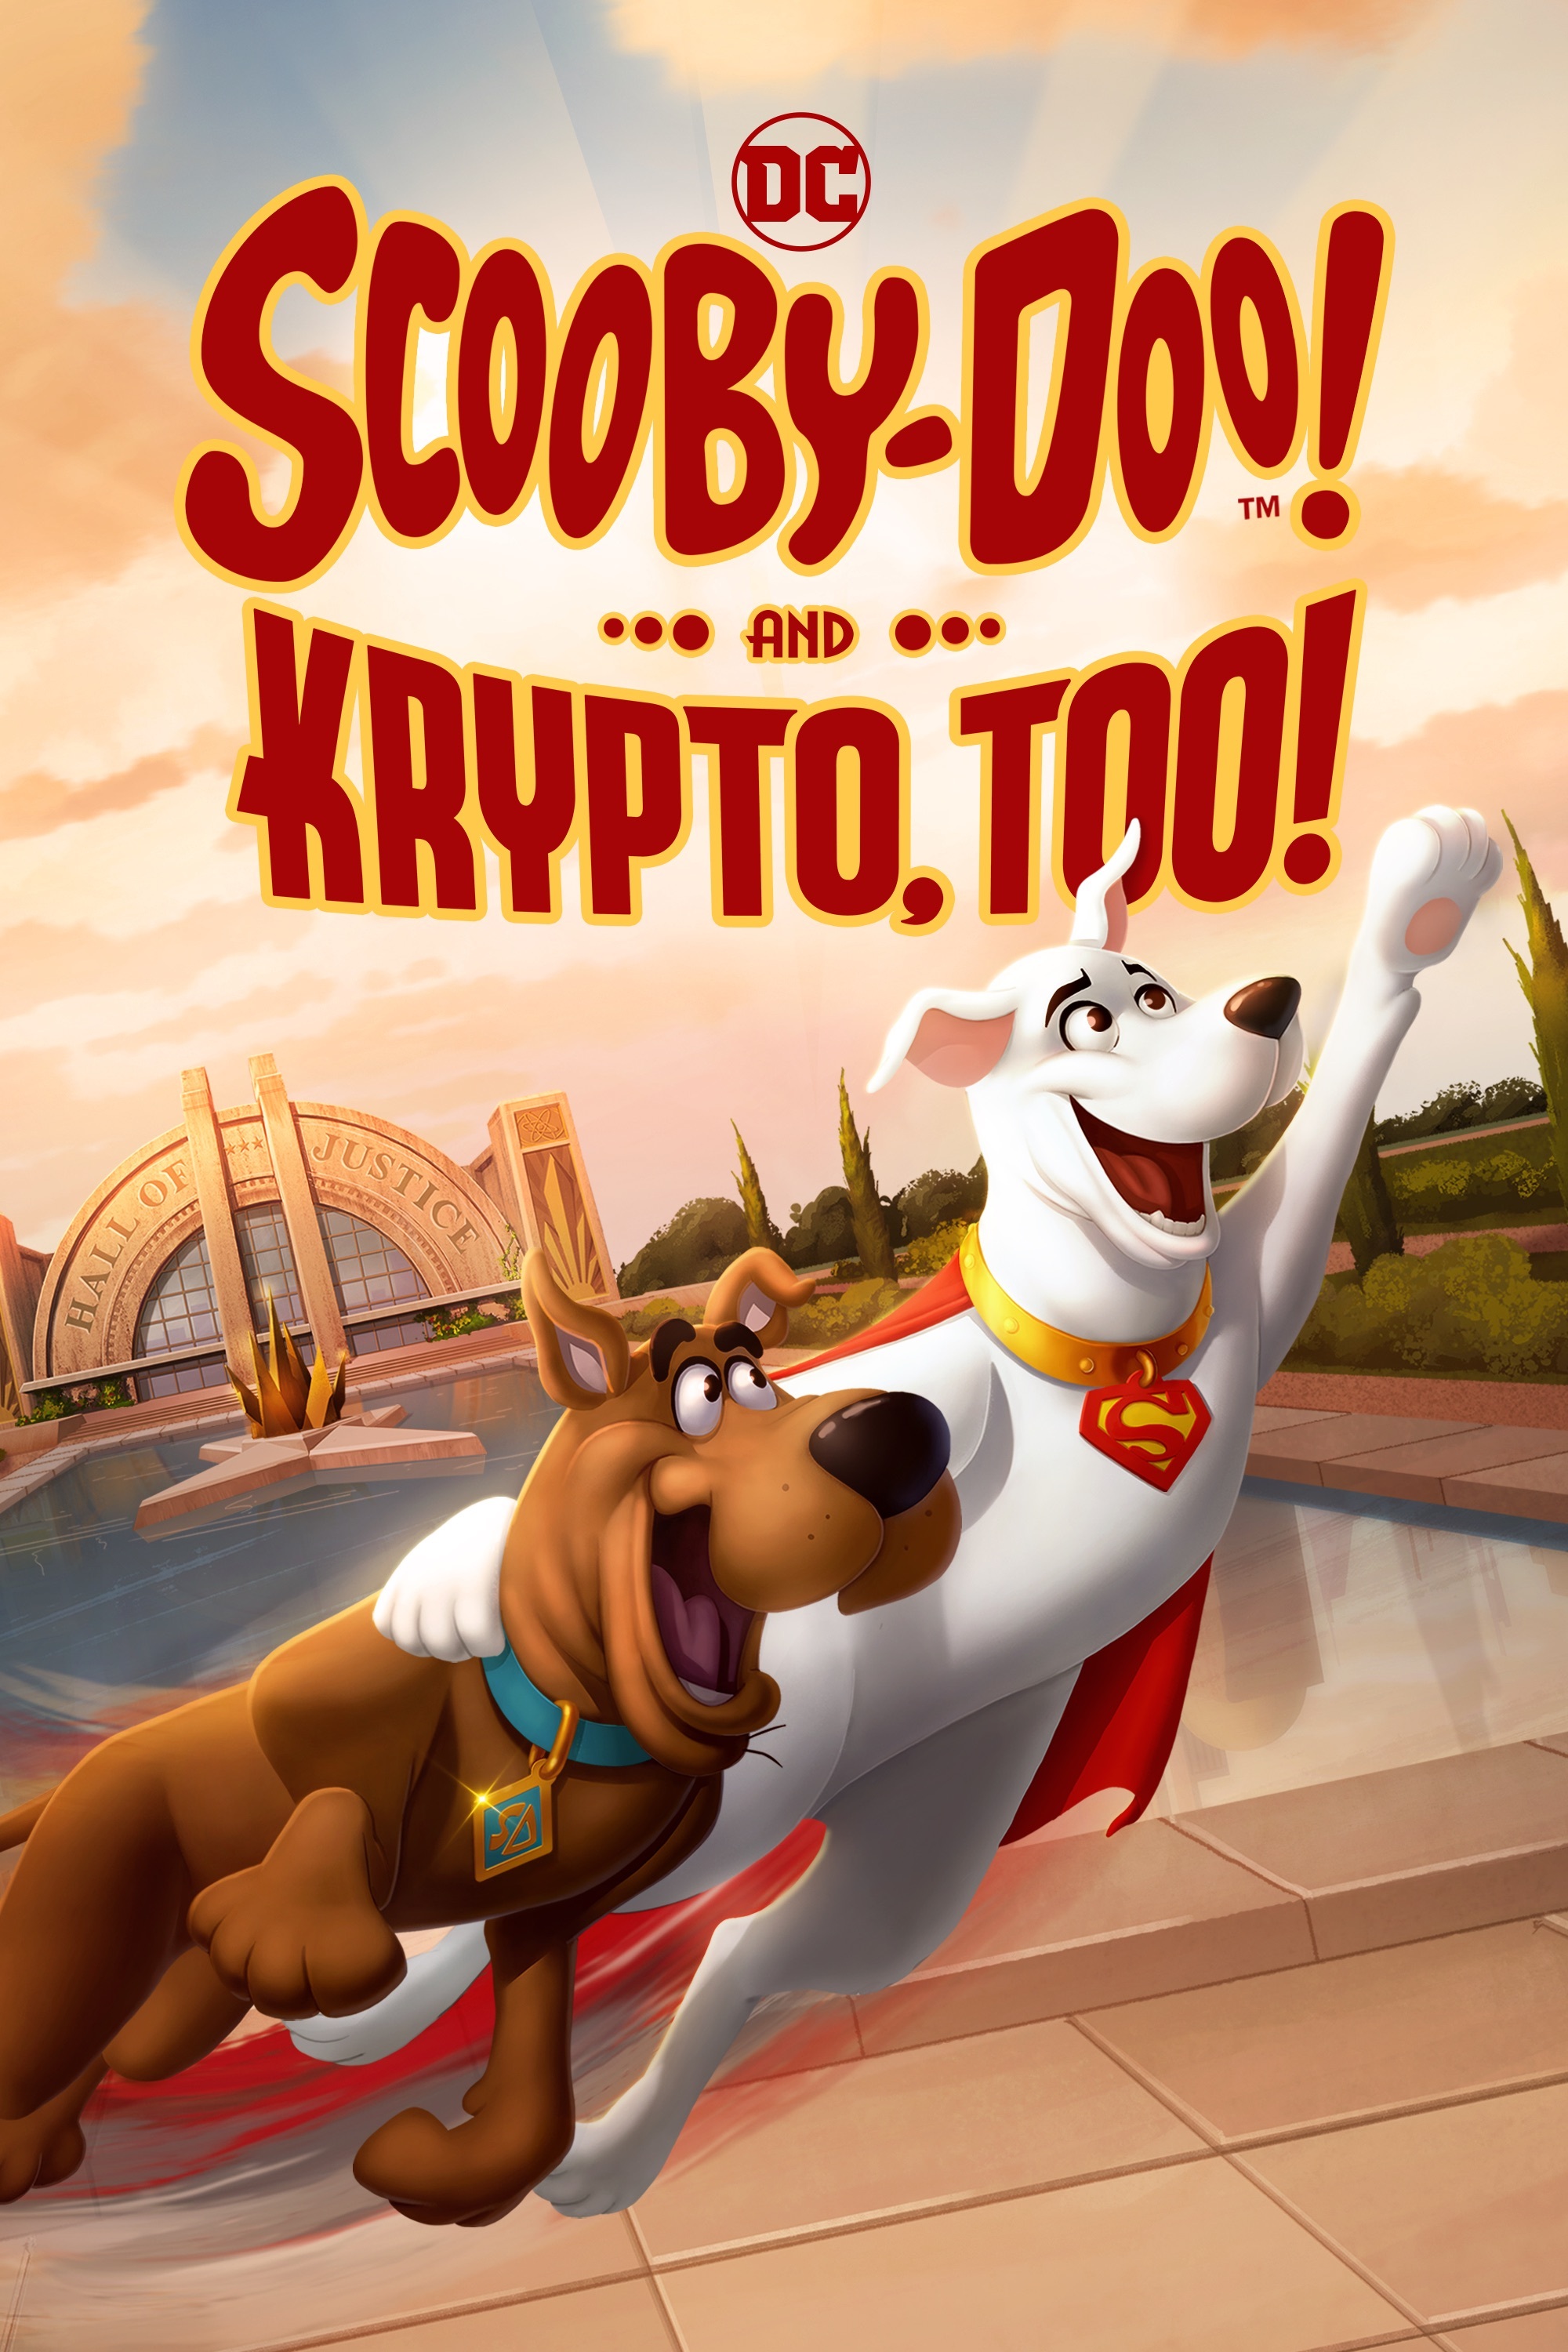 Banner Phim Scooby-Doo! Và Cả Krypto Nữa! (Scooby-Doo! And Krypto Too!)